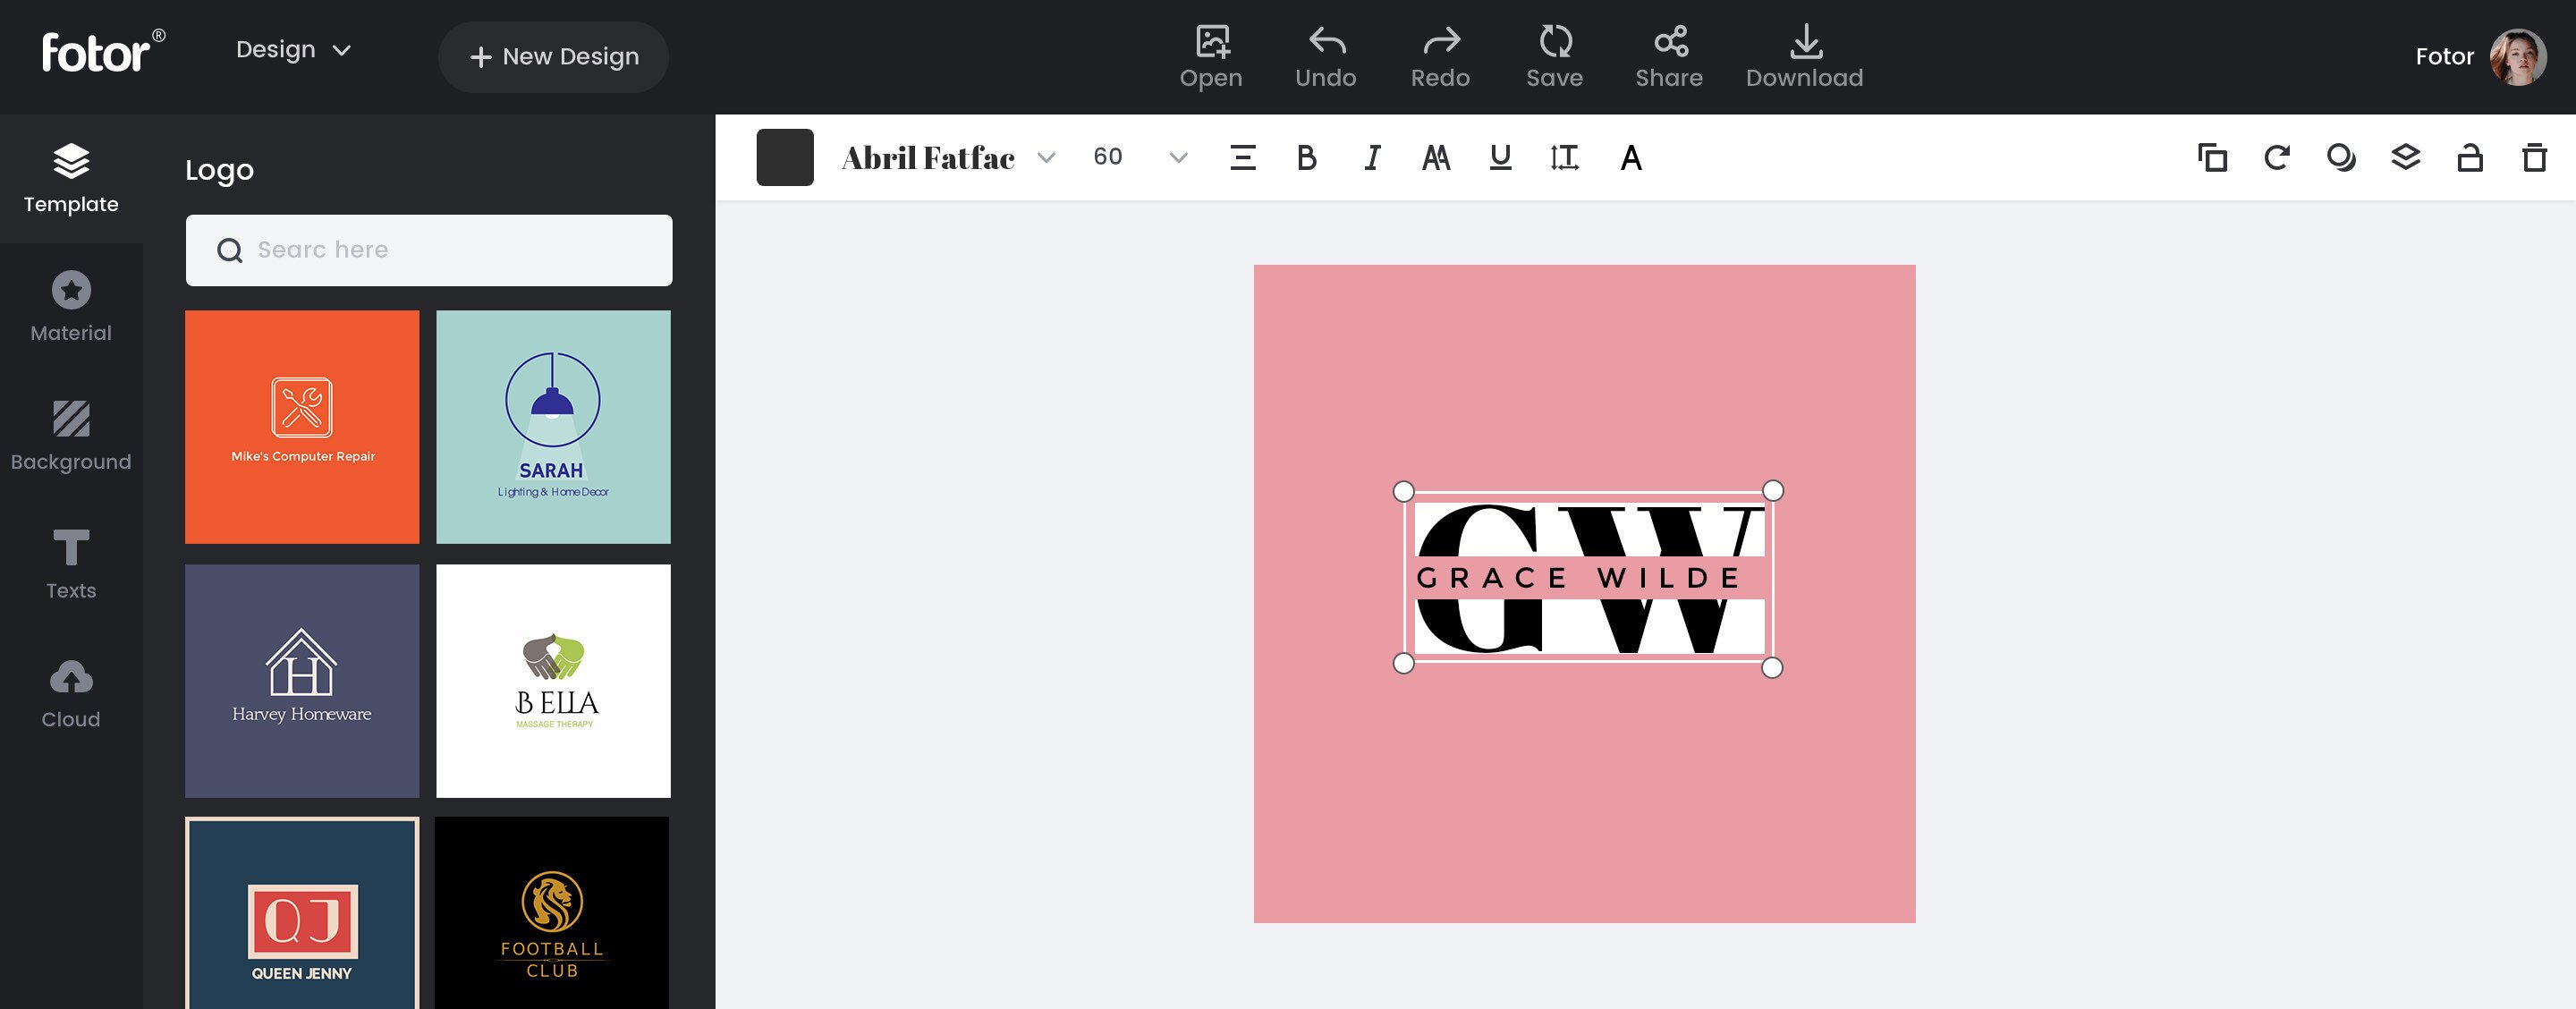 Free Logo Maker: Create Customized Design Logo Design Online in